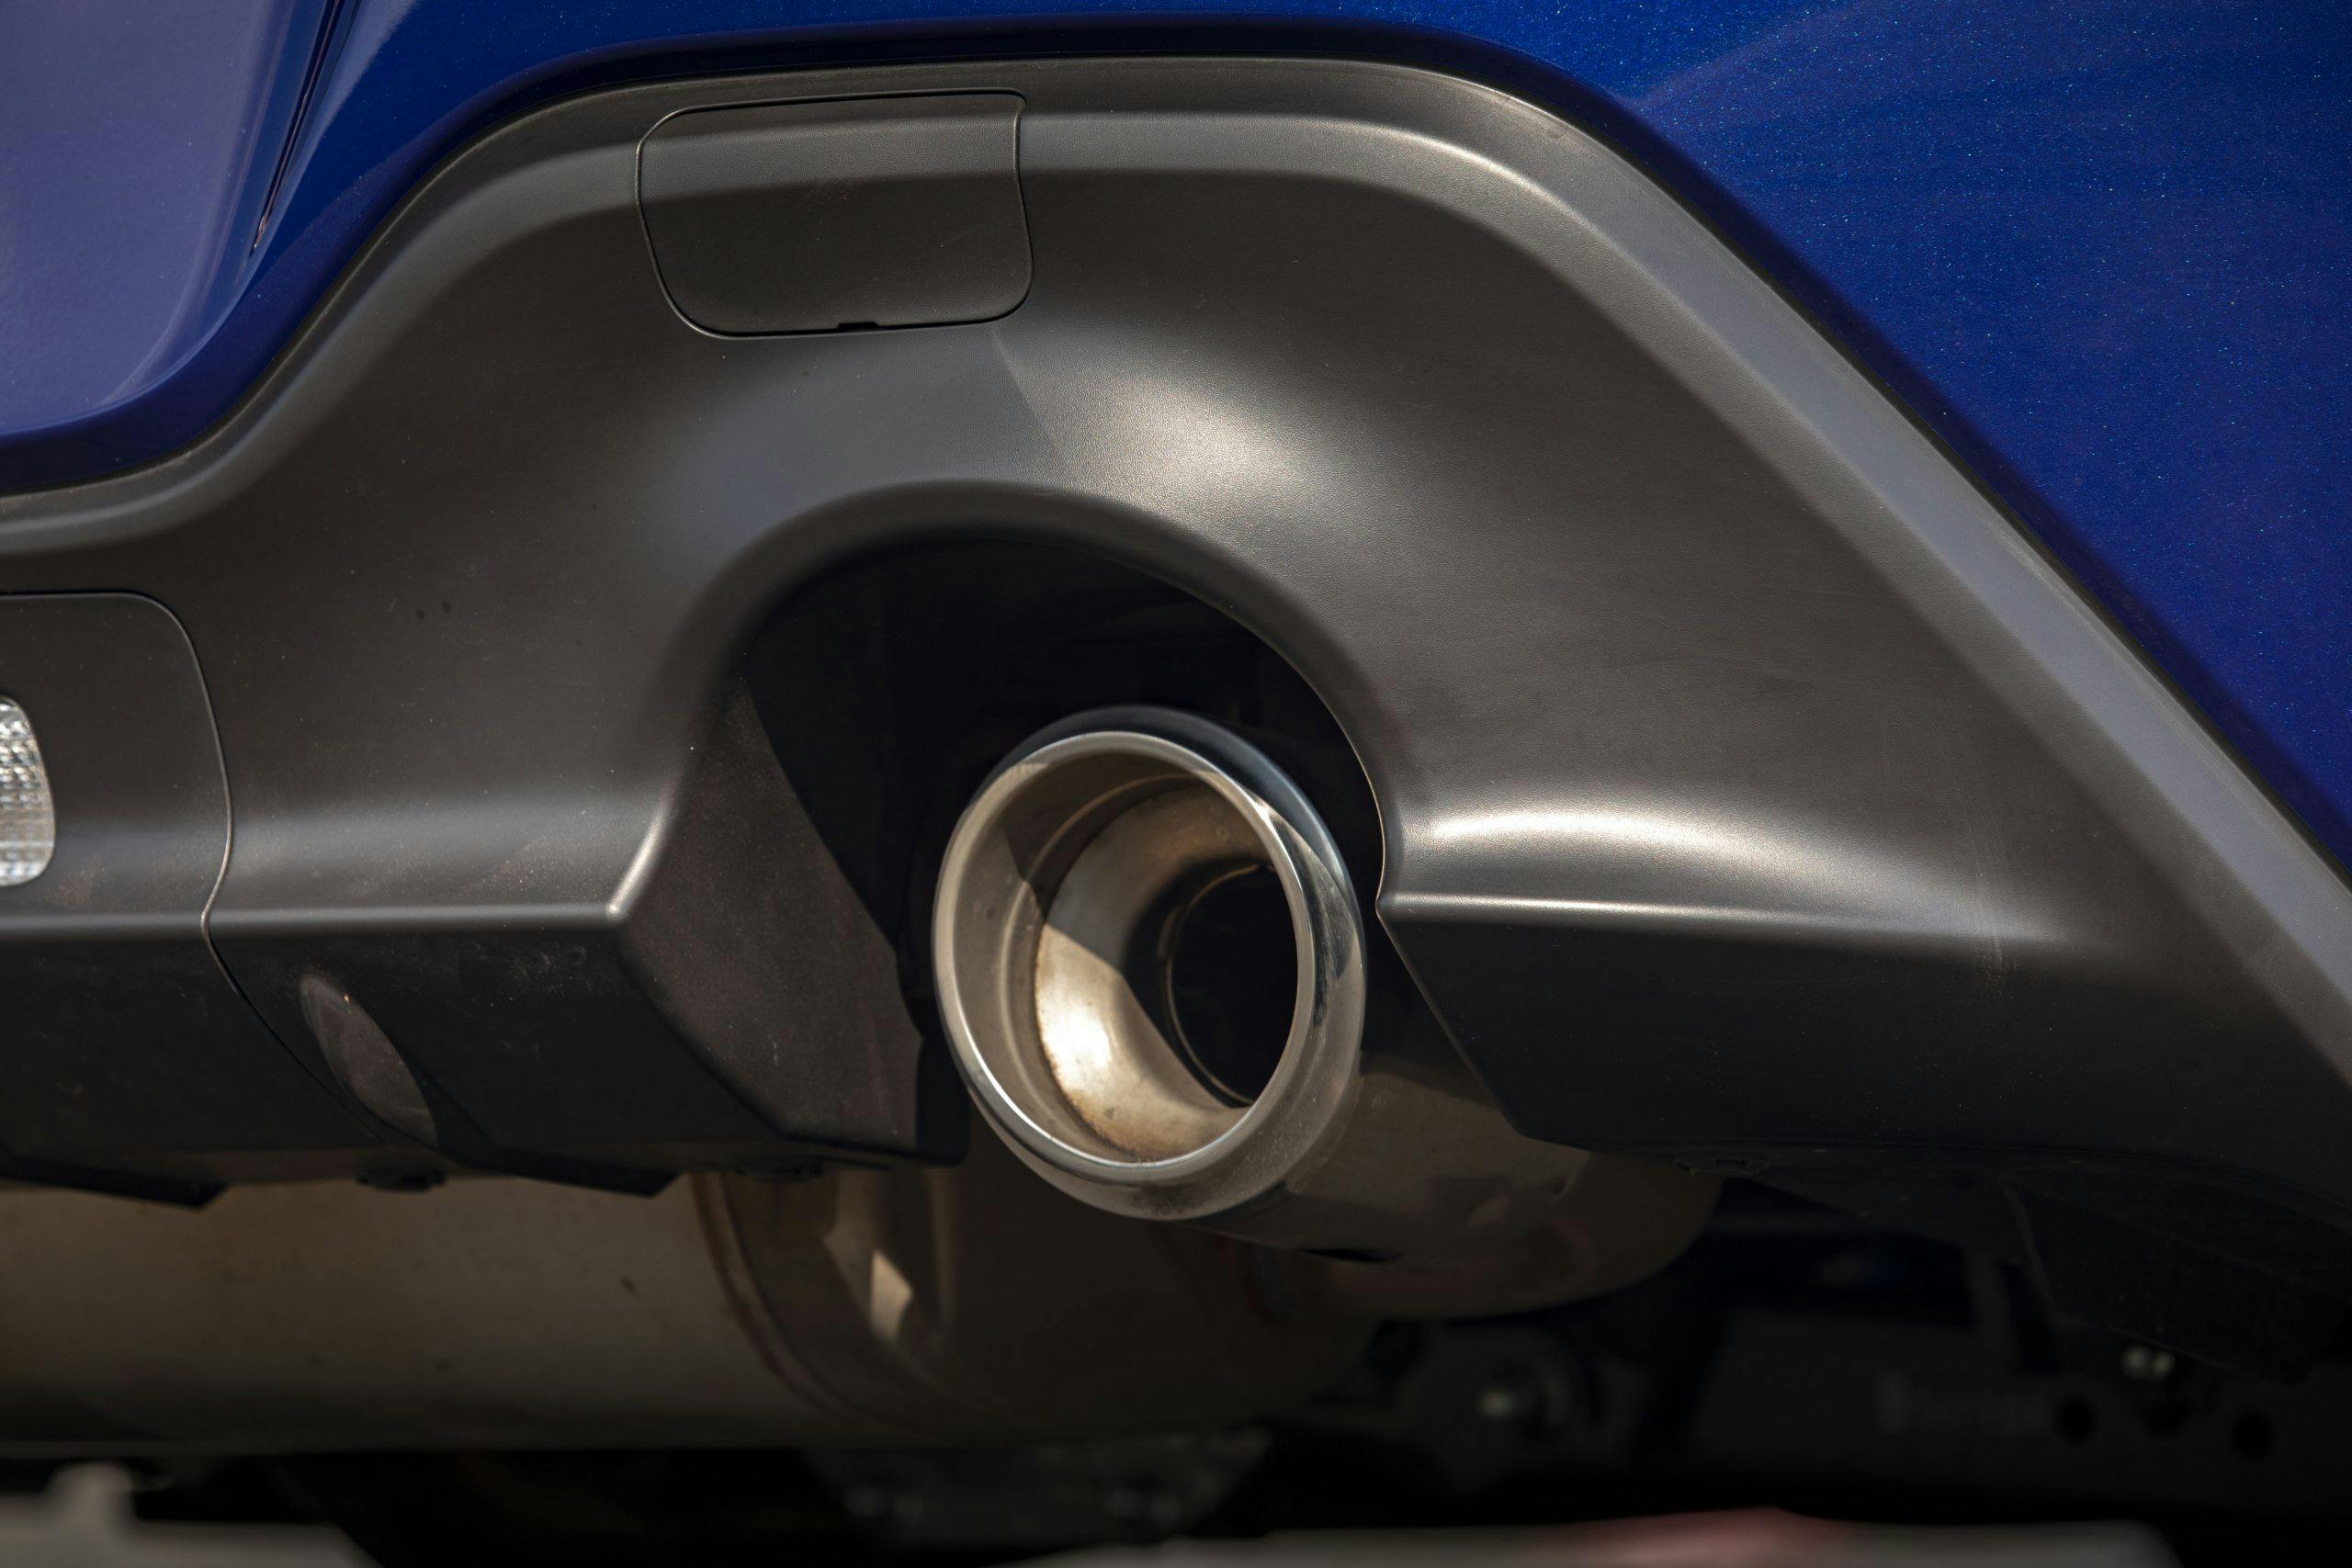 2022 Subaru BRZ rear exhaust tip detail